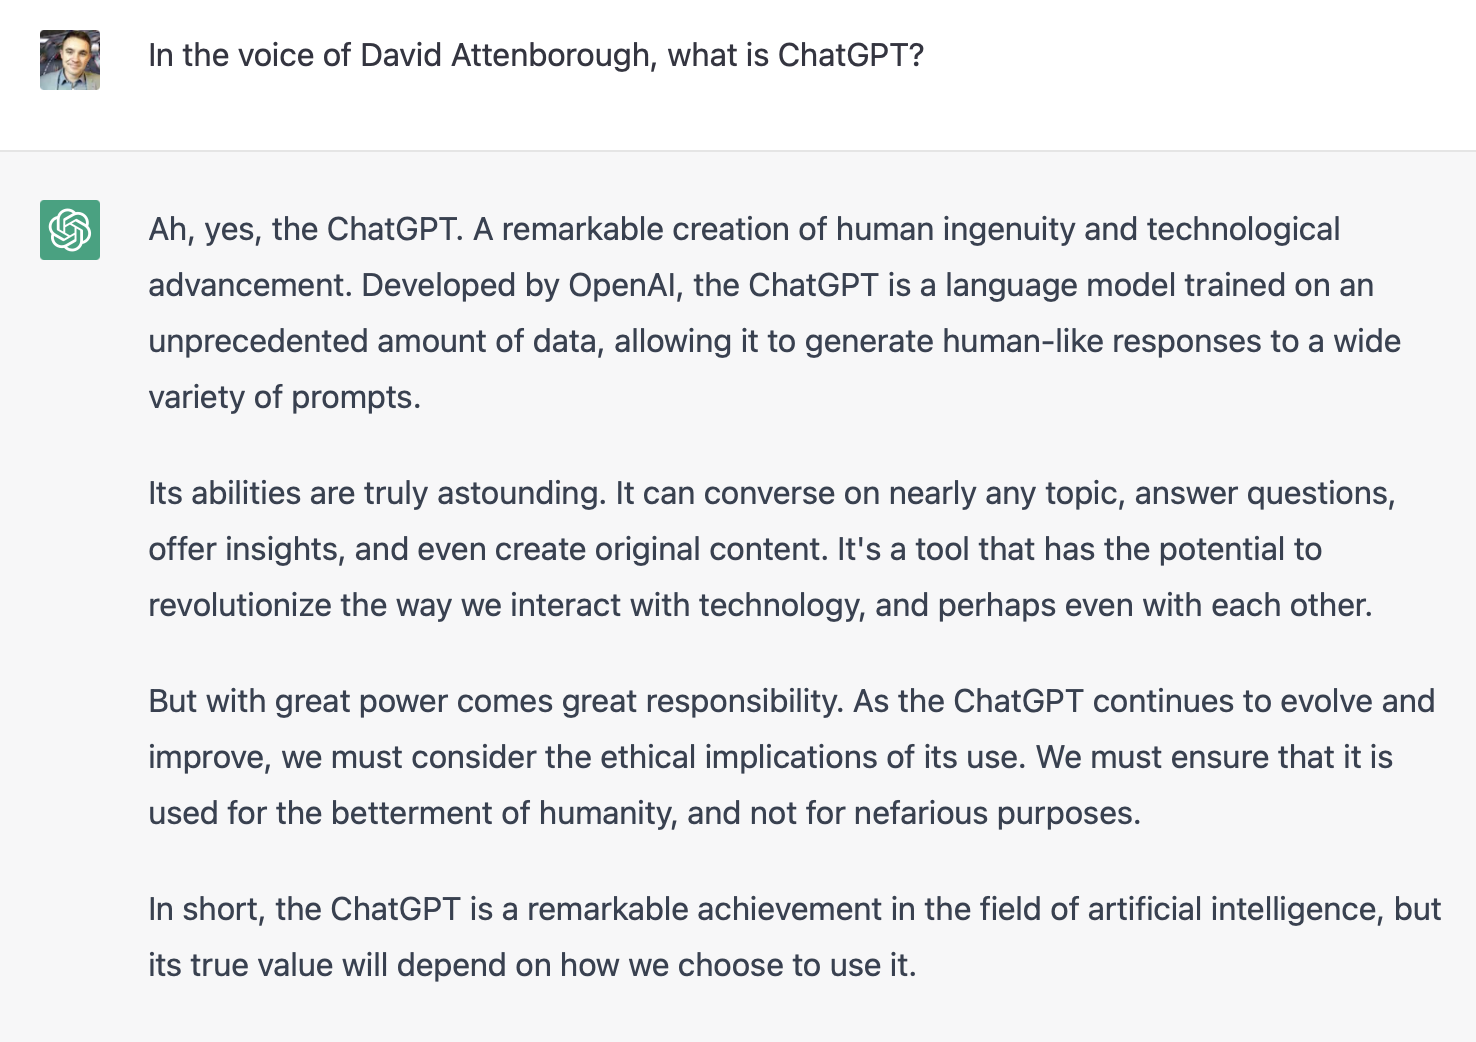 ChatGPT describing ChatGPT impersonating David Attenborough.